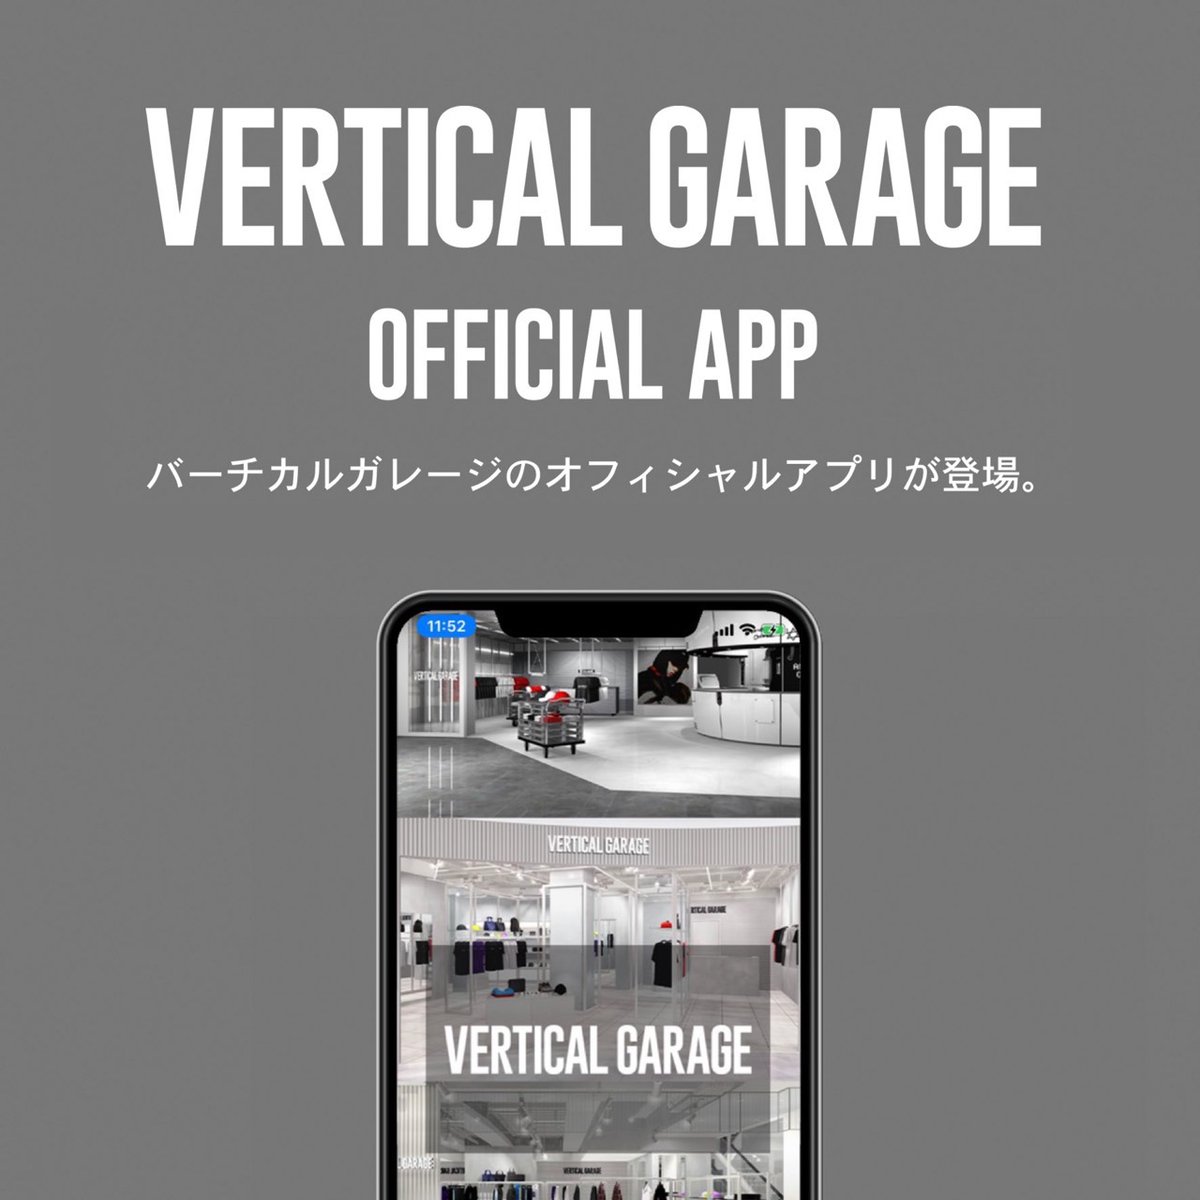 24karats Vertical Garage App J S B 24karats Pkcz等を取り扱うvertical Garageより ポイント機能付きvertical Garage公式アプリが登場 ダウンロードしていただくとアプリ限定のオリジナル壁紙 オリジナルフォトフレームをプレゼント